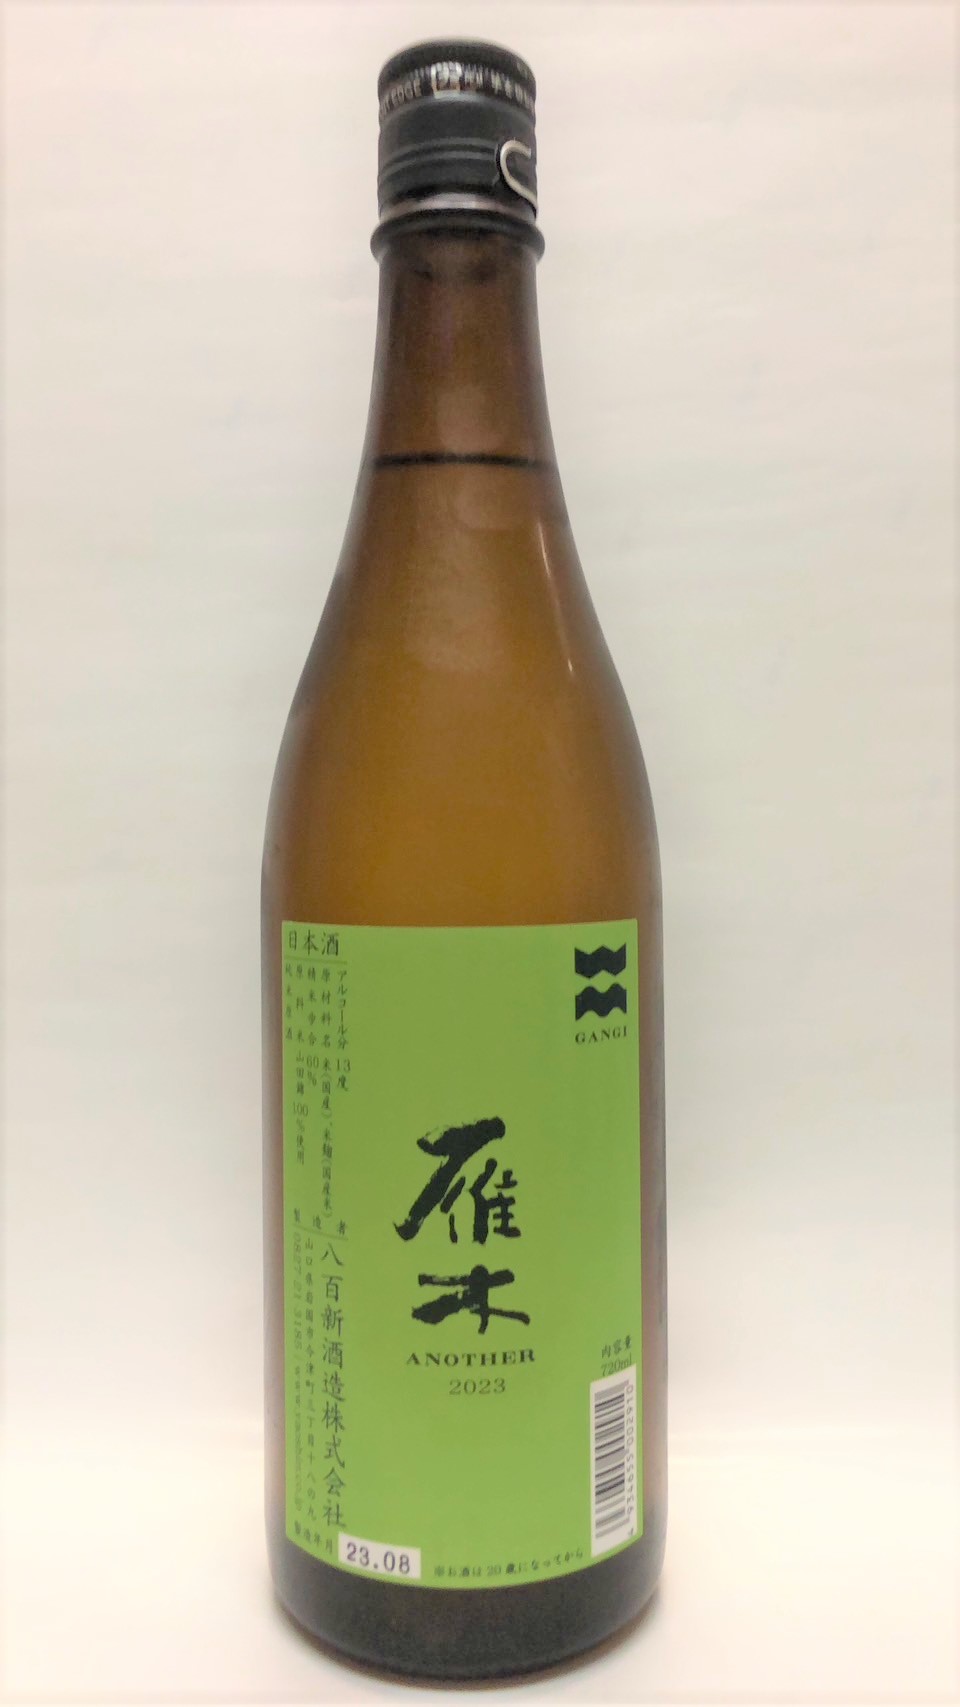 雁木 another 2023 純米原酒 | 日本酒 | 商品一覧 | 日本酒・地酒の 